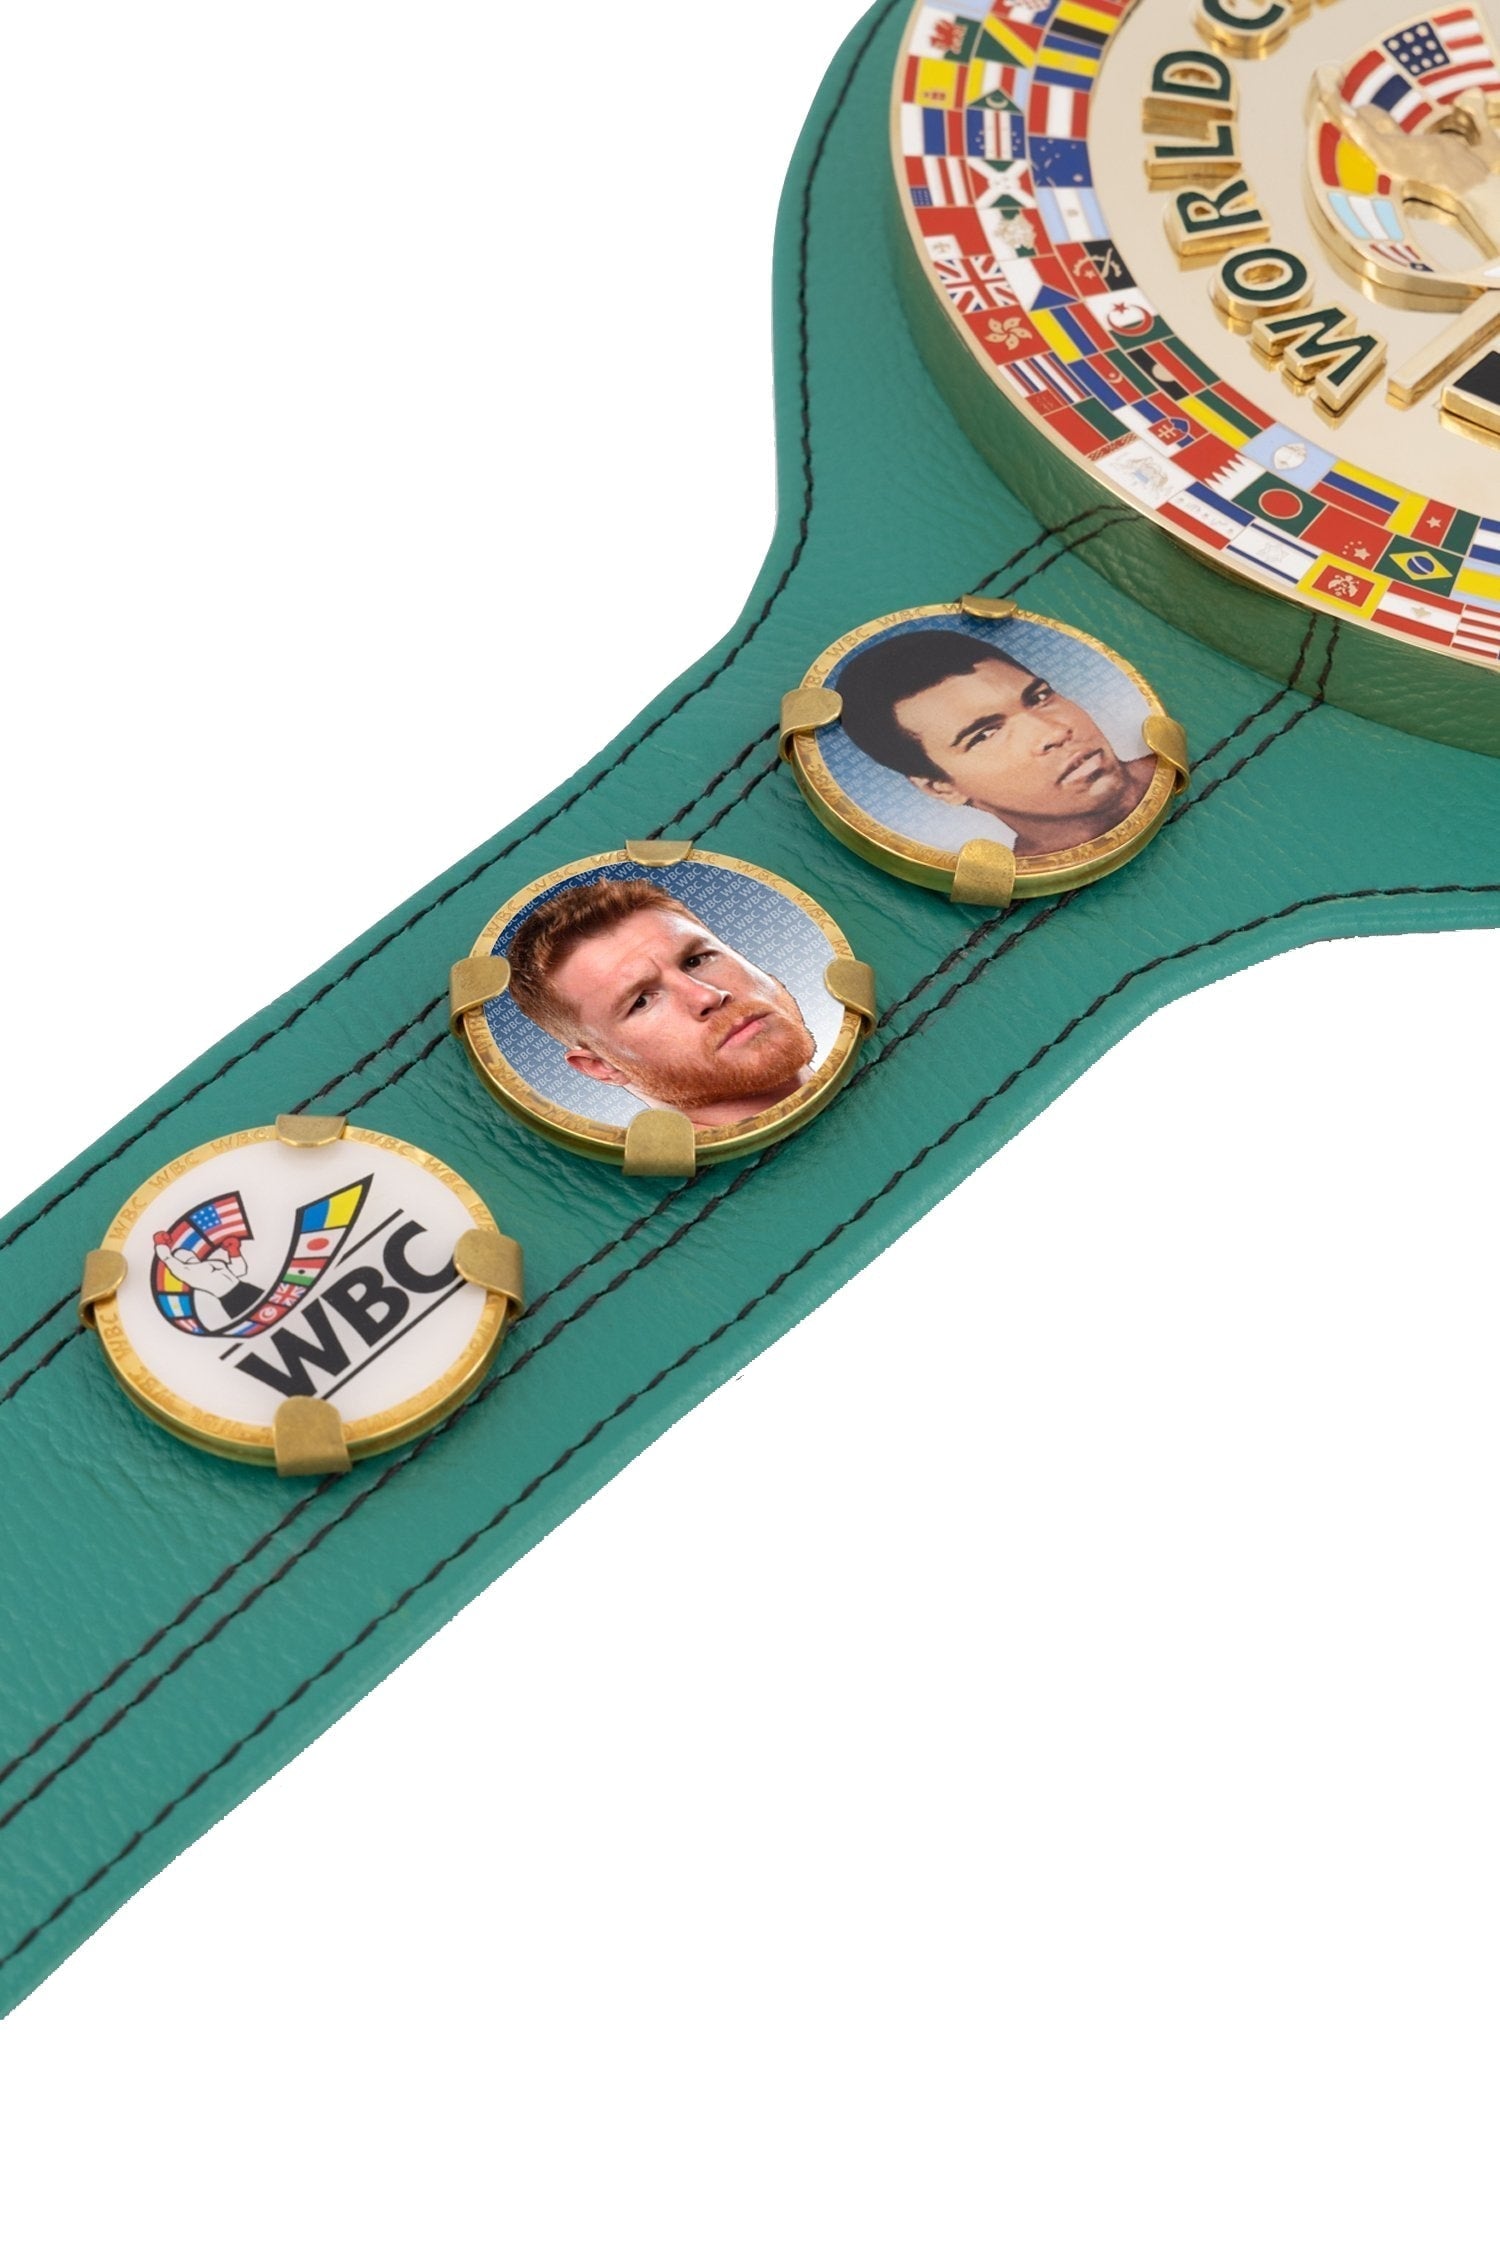 WBC Store Replica Belts WBC - Championship Belt "Historic Fights" Saúl “Canelo” Álvarez vs. Floyd Mayweather Jr.